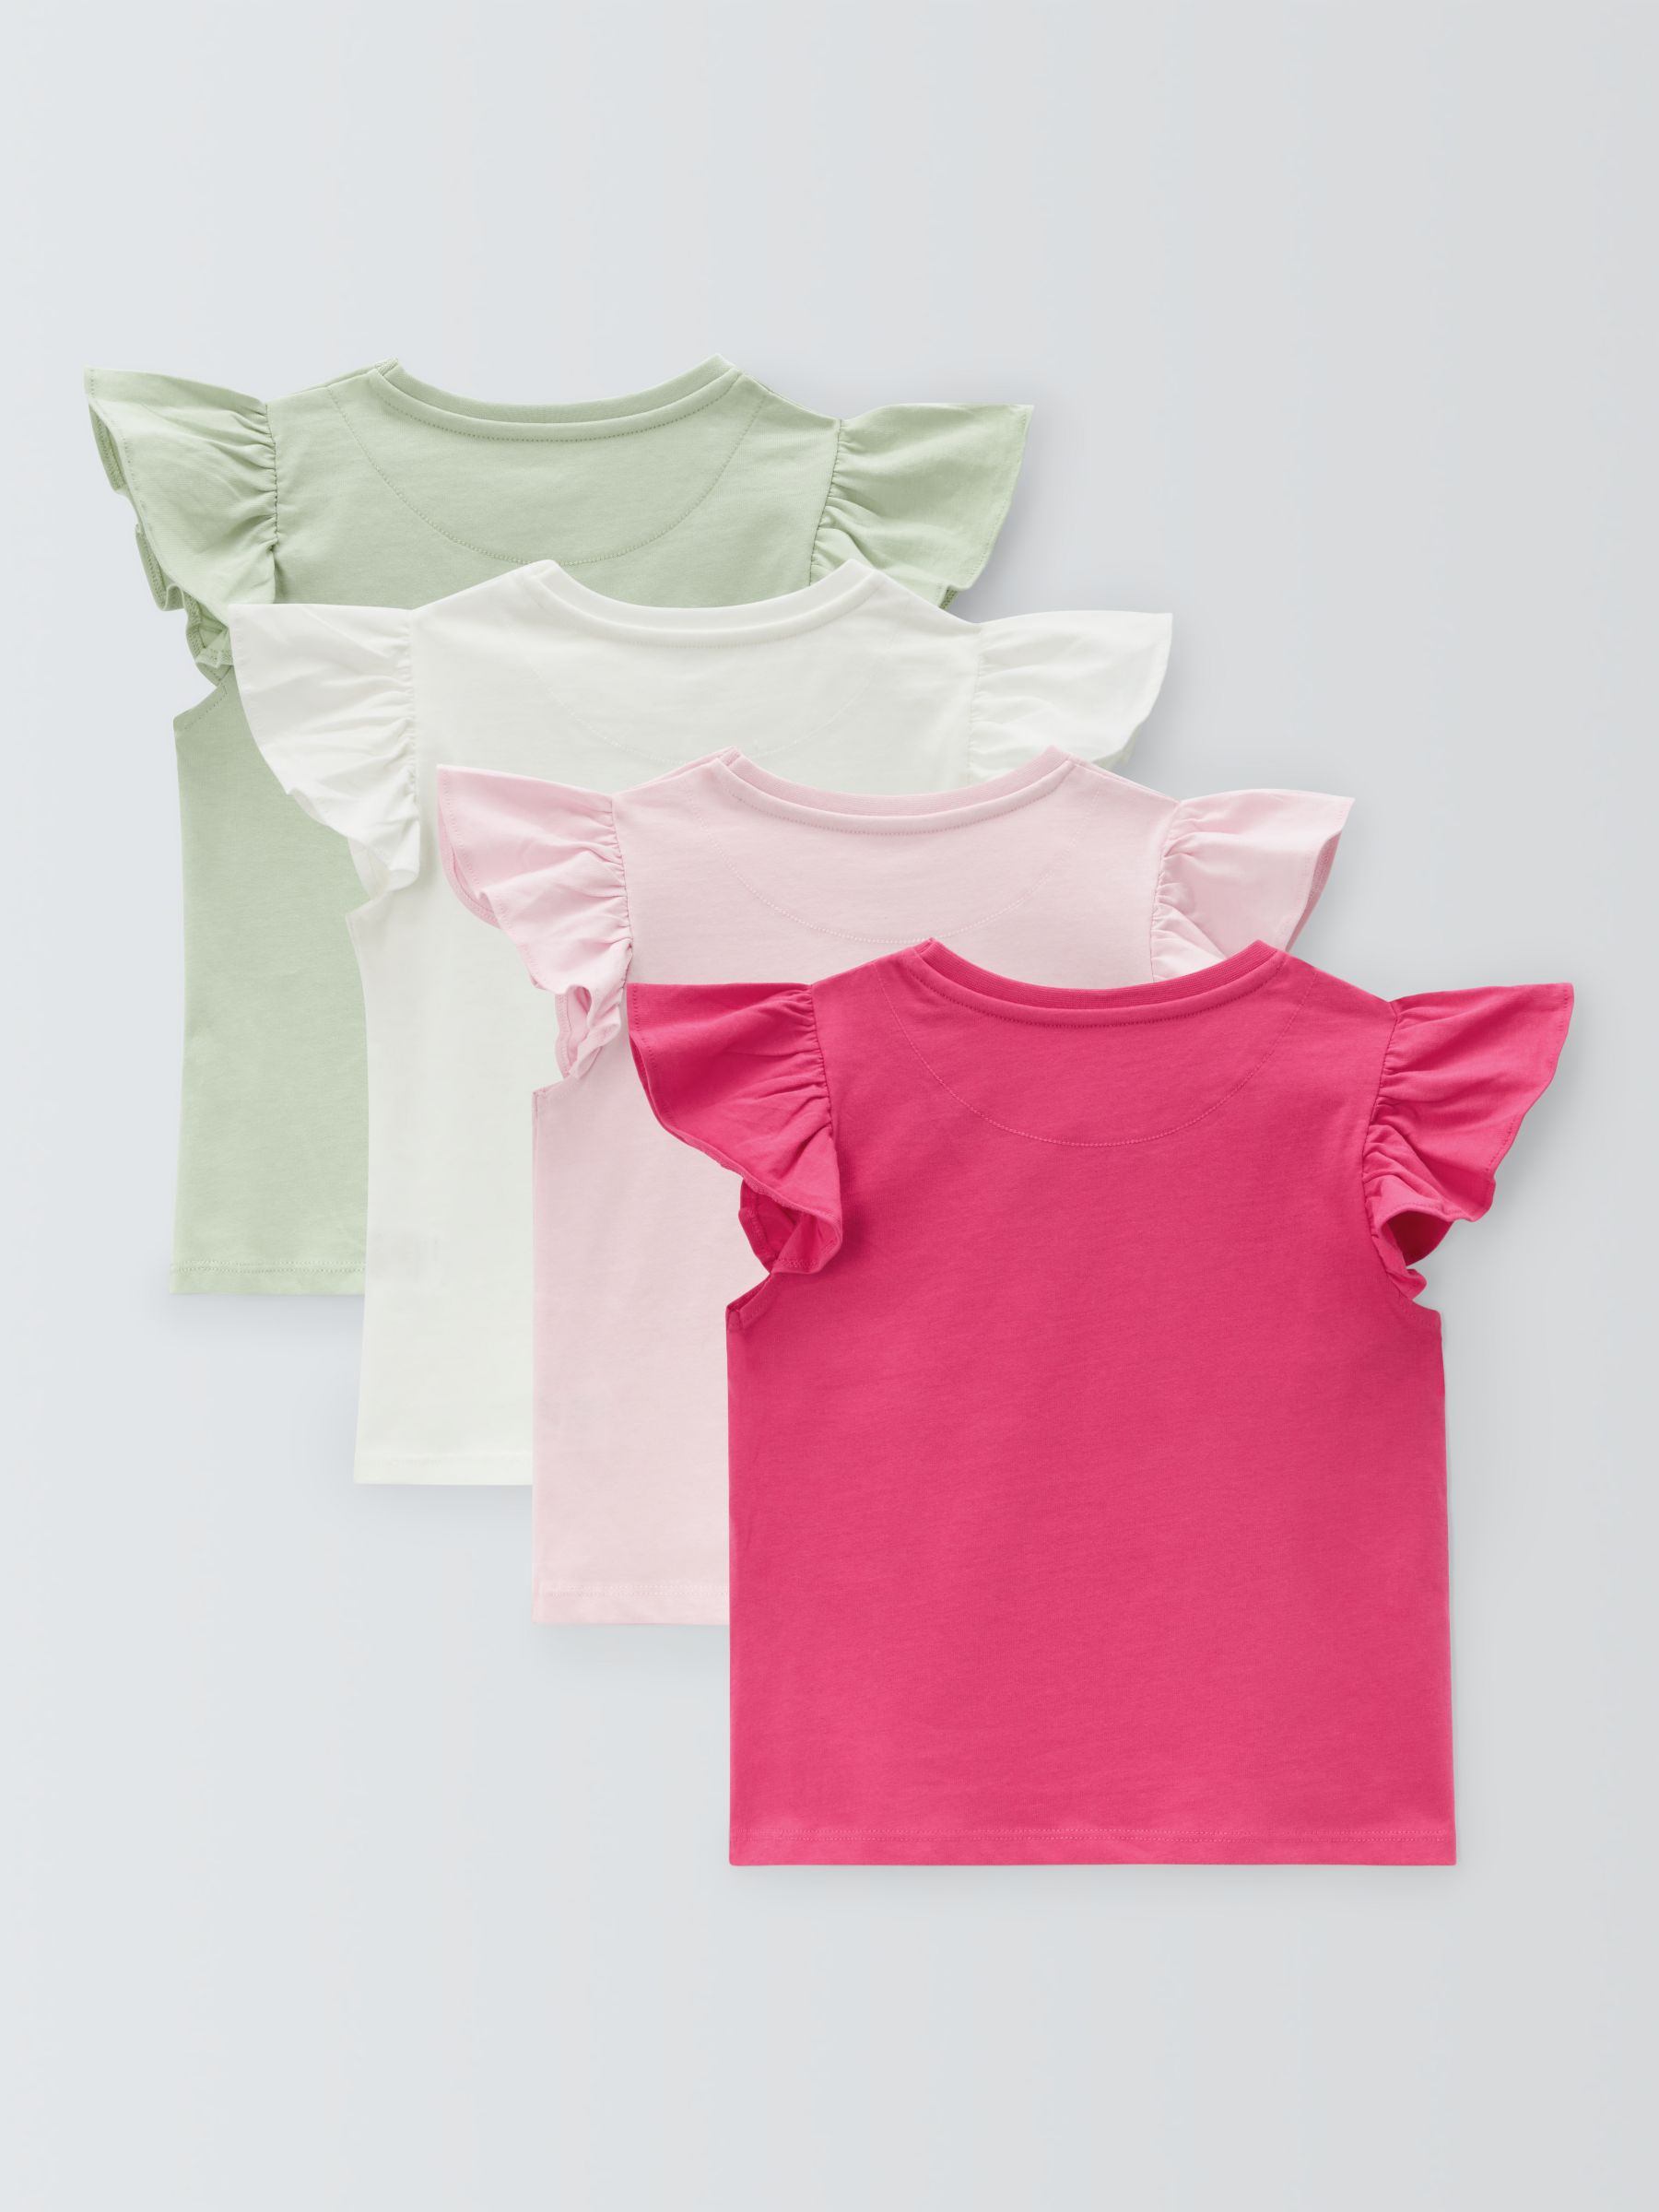 John Lewis Kids' Frill Sleeve Tops, Pack of 4, Pink/Multi, 7 years